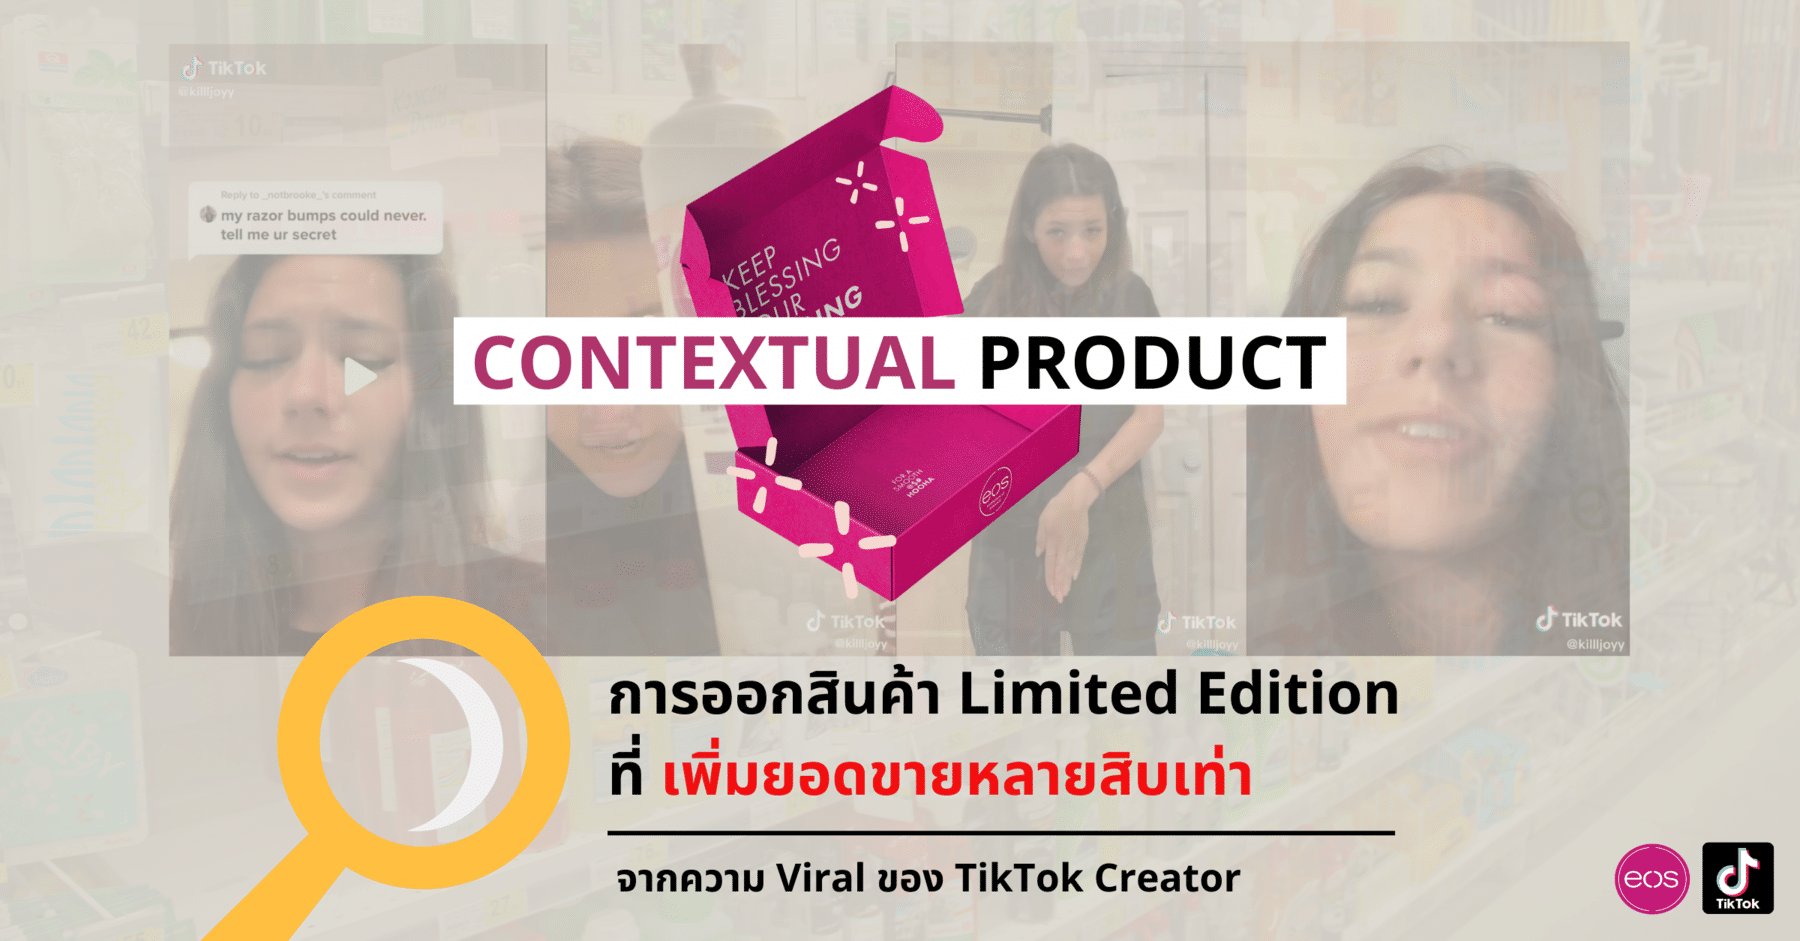 Contextual Product การออกสินค้าจากความ Viral ของ TikTok Creator